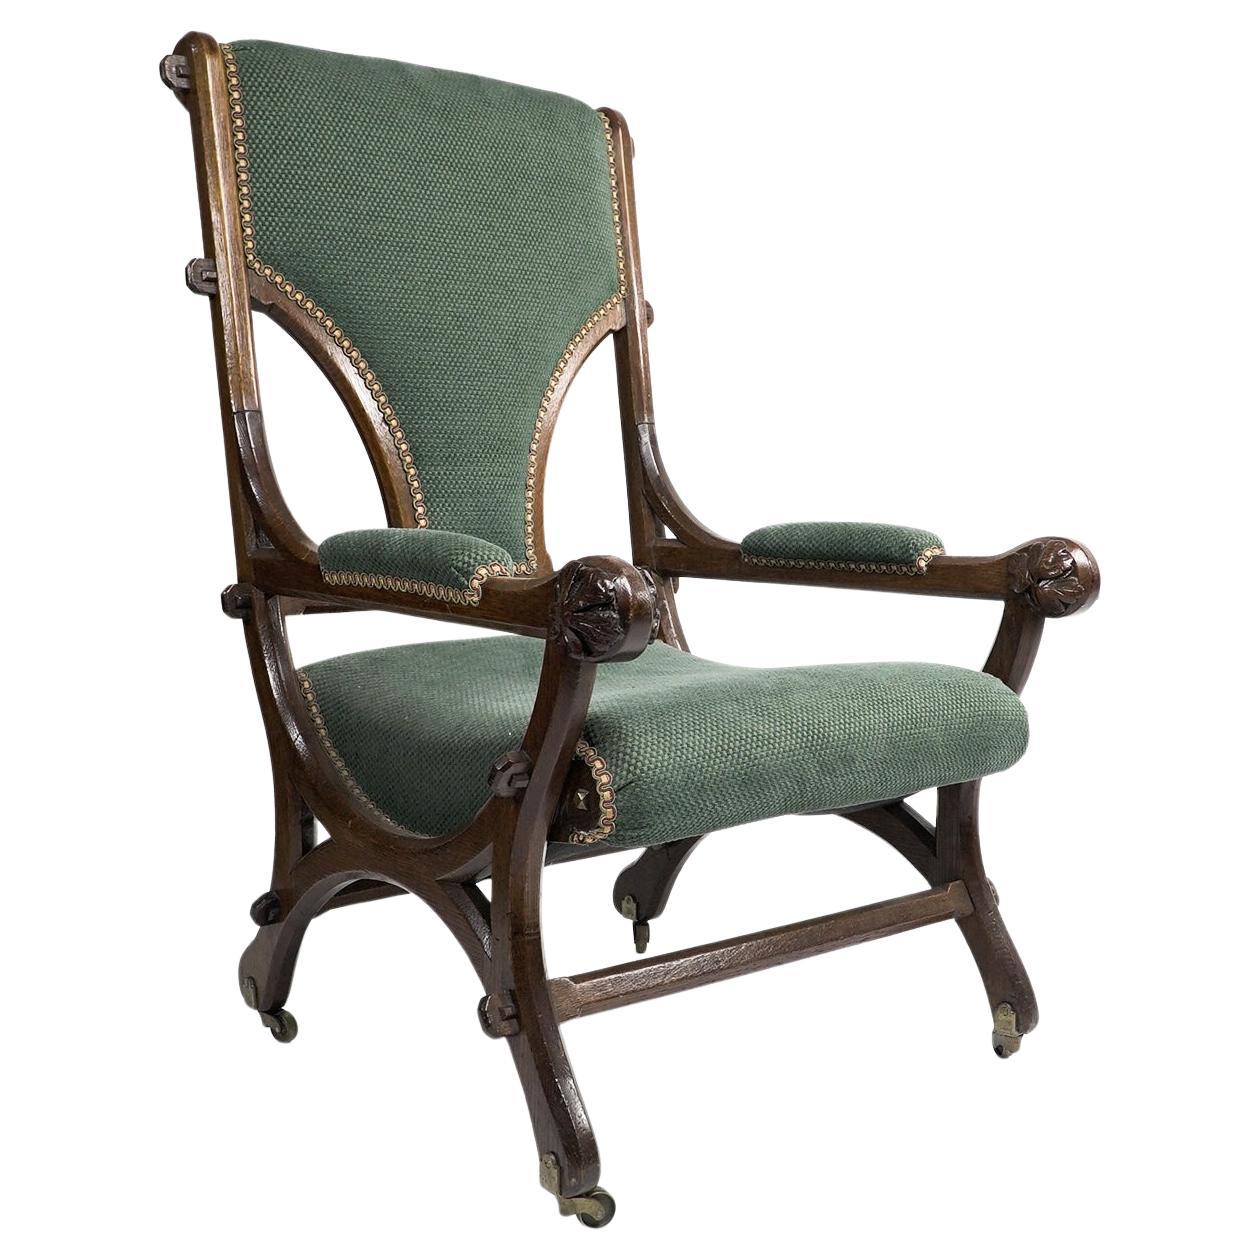 John Pollard Seddon Gothic Revival oak armchair with through pegged tenon joints For Sale